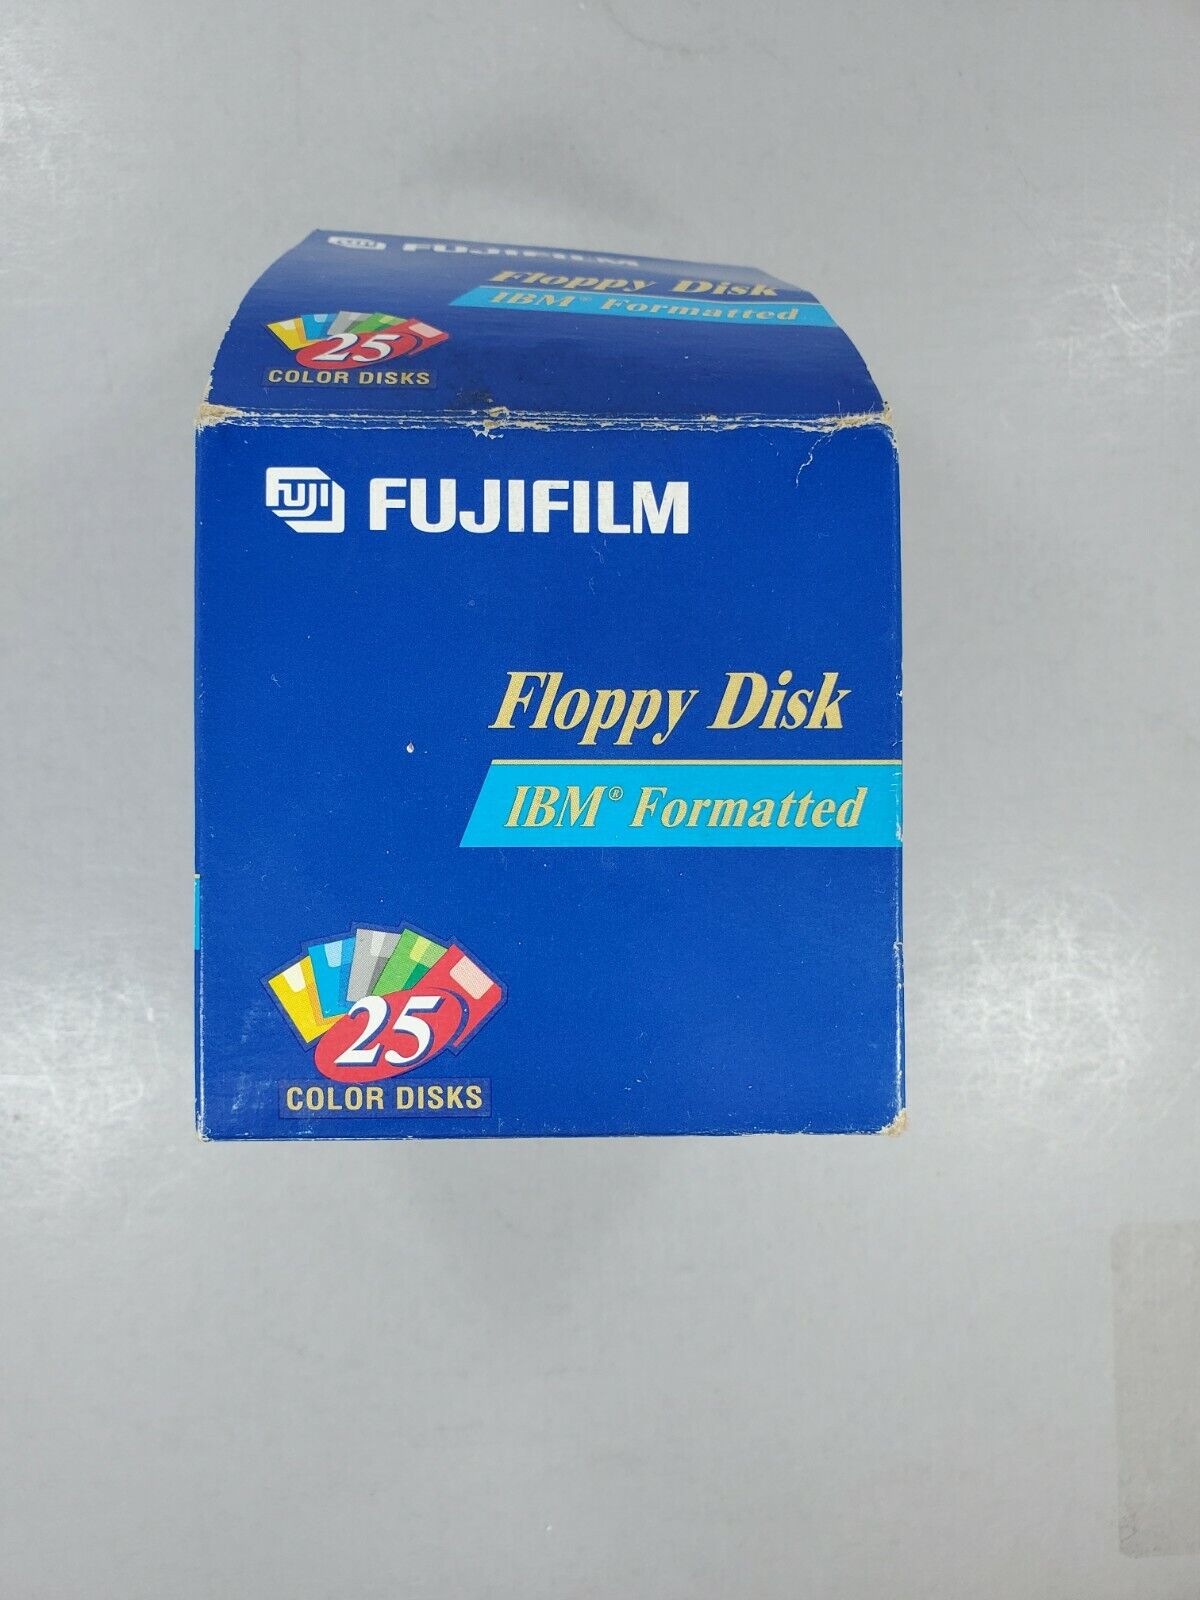 Fuji Fujifilm Floppy Disk 2HD IBM 3.5” Color Formatted Disks 24Pcs Open Box New